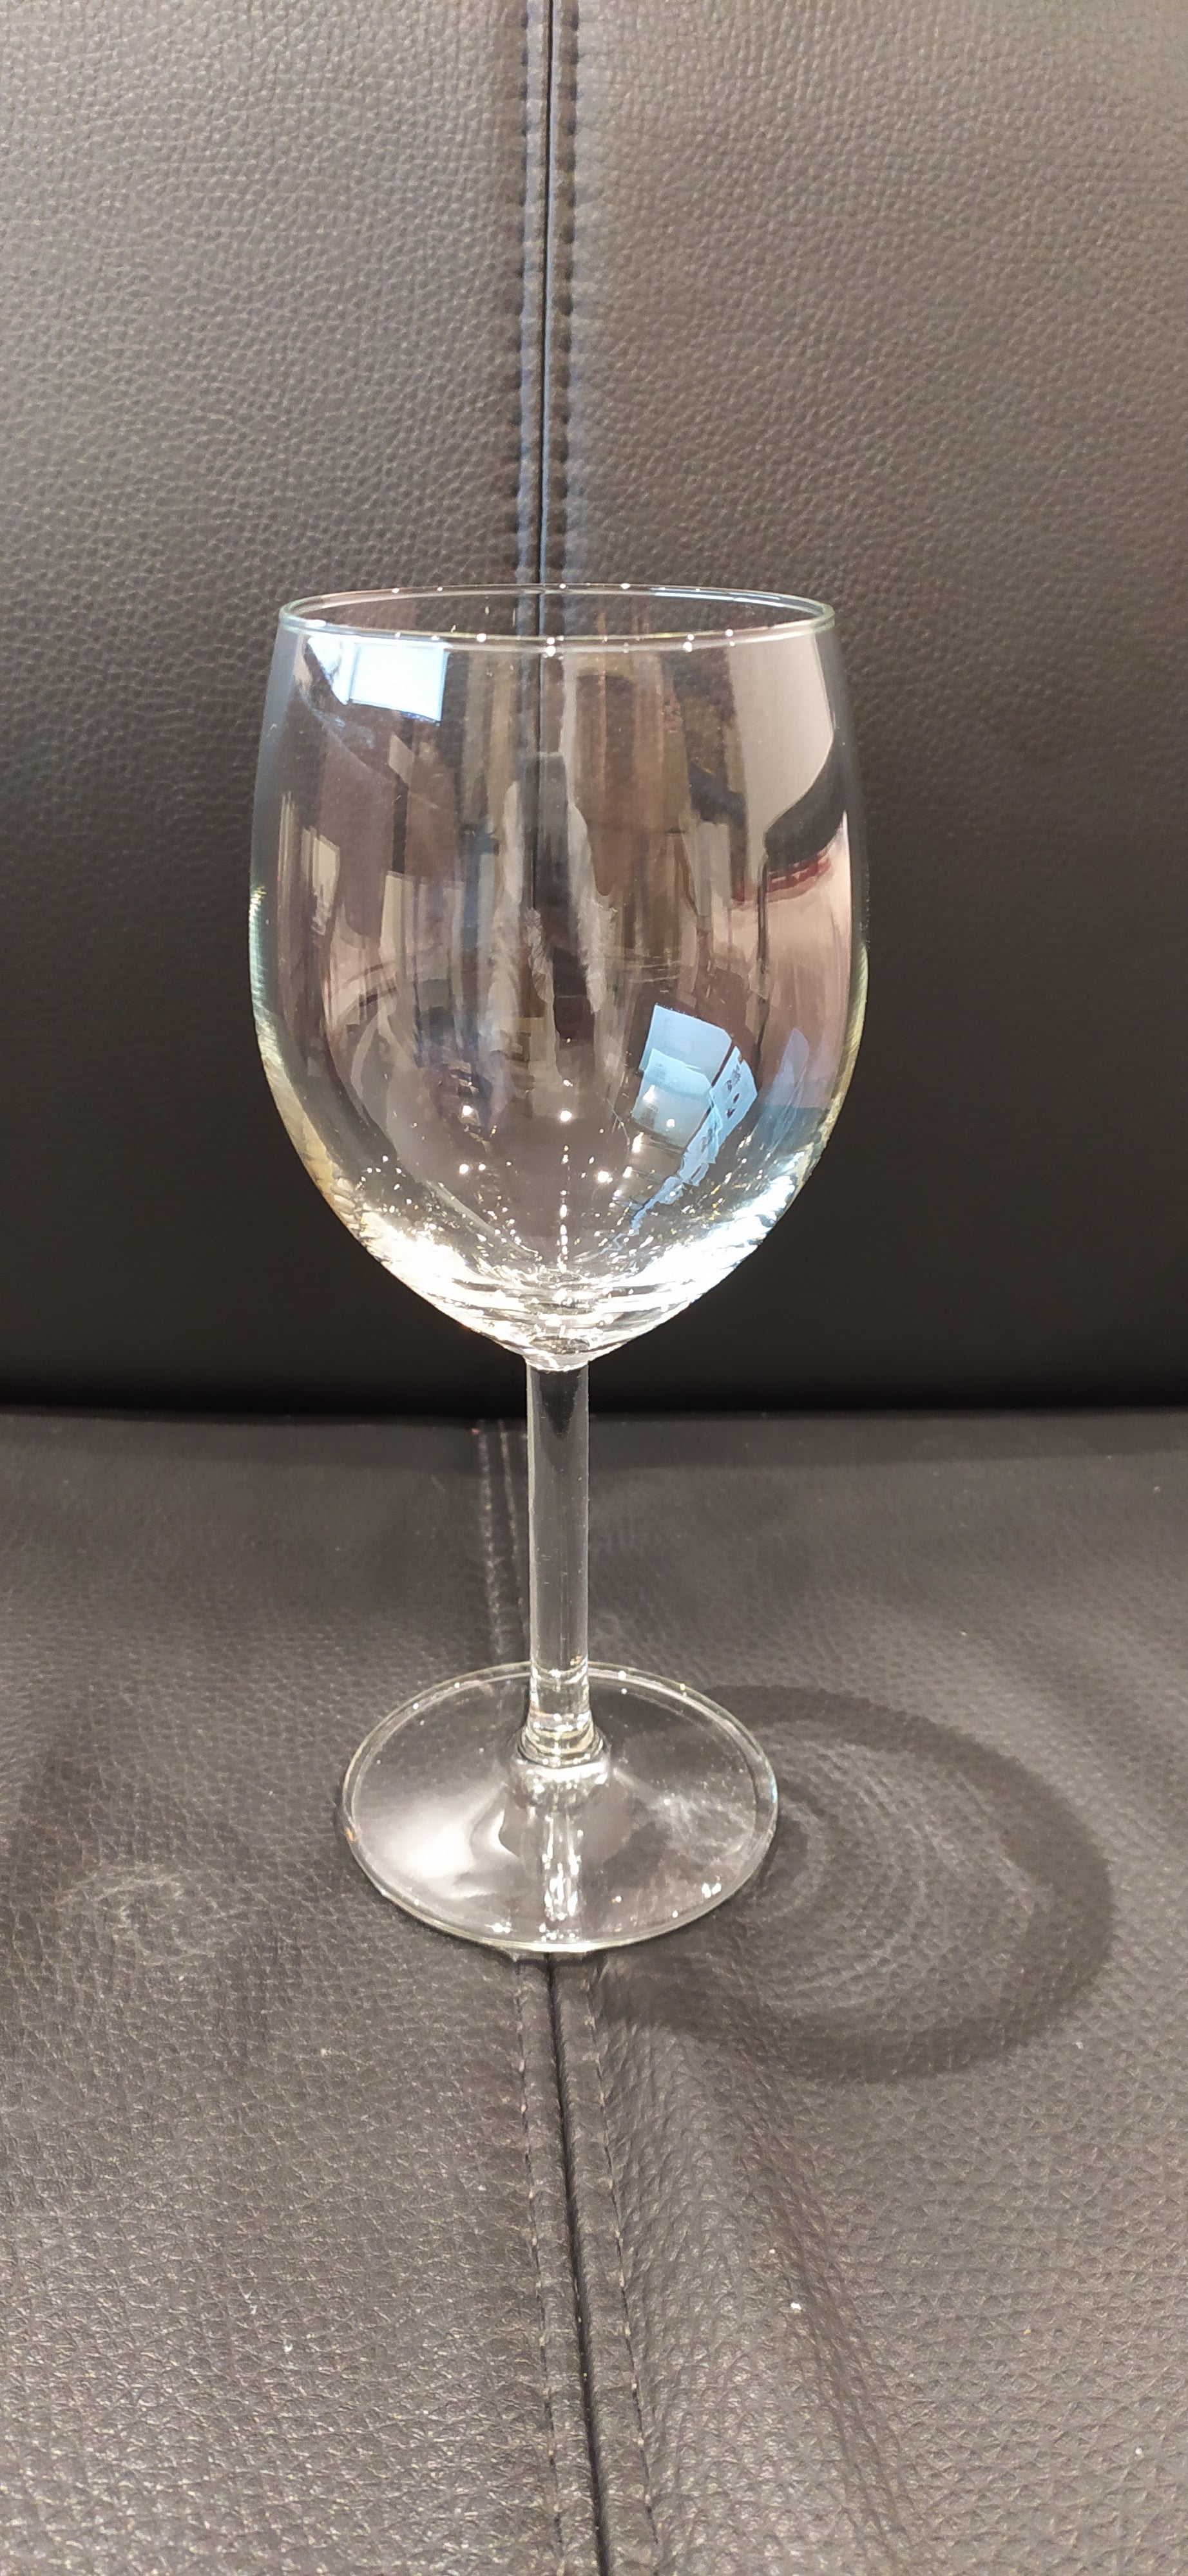 SVALKA Wine glass, clear glass - IKEA